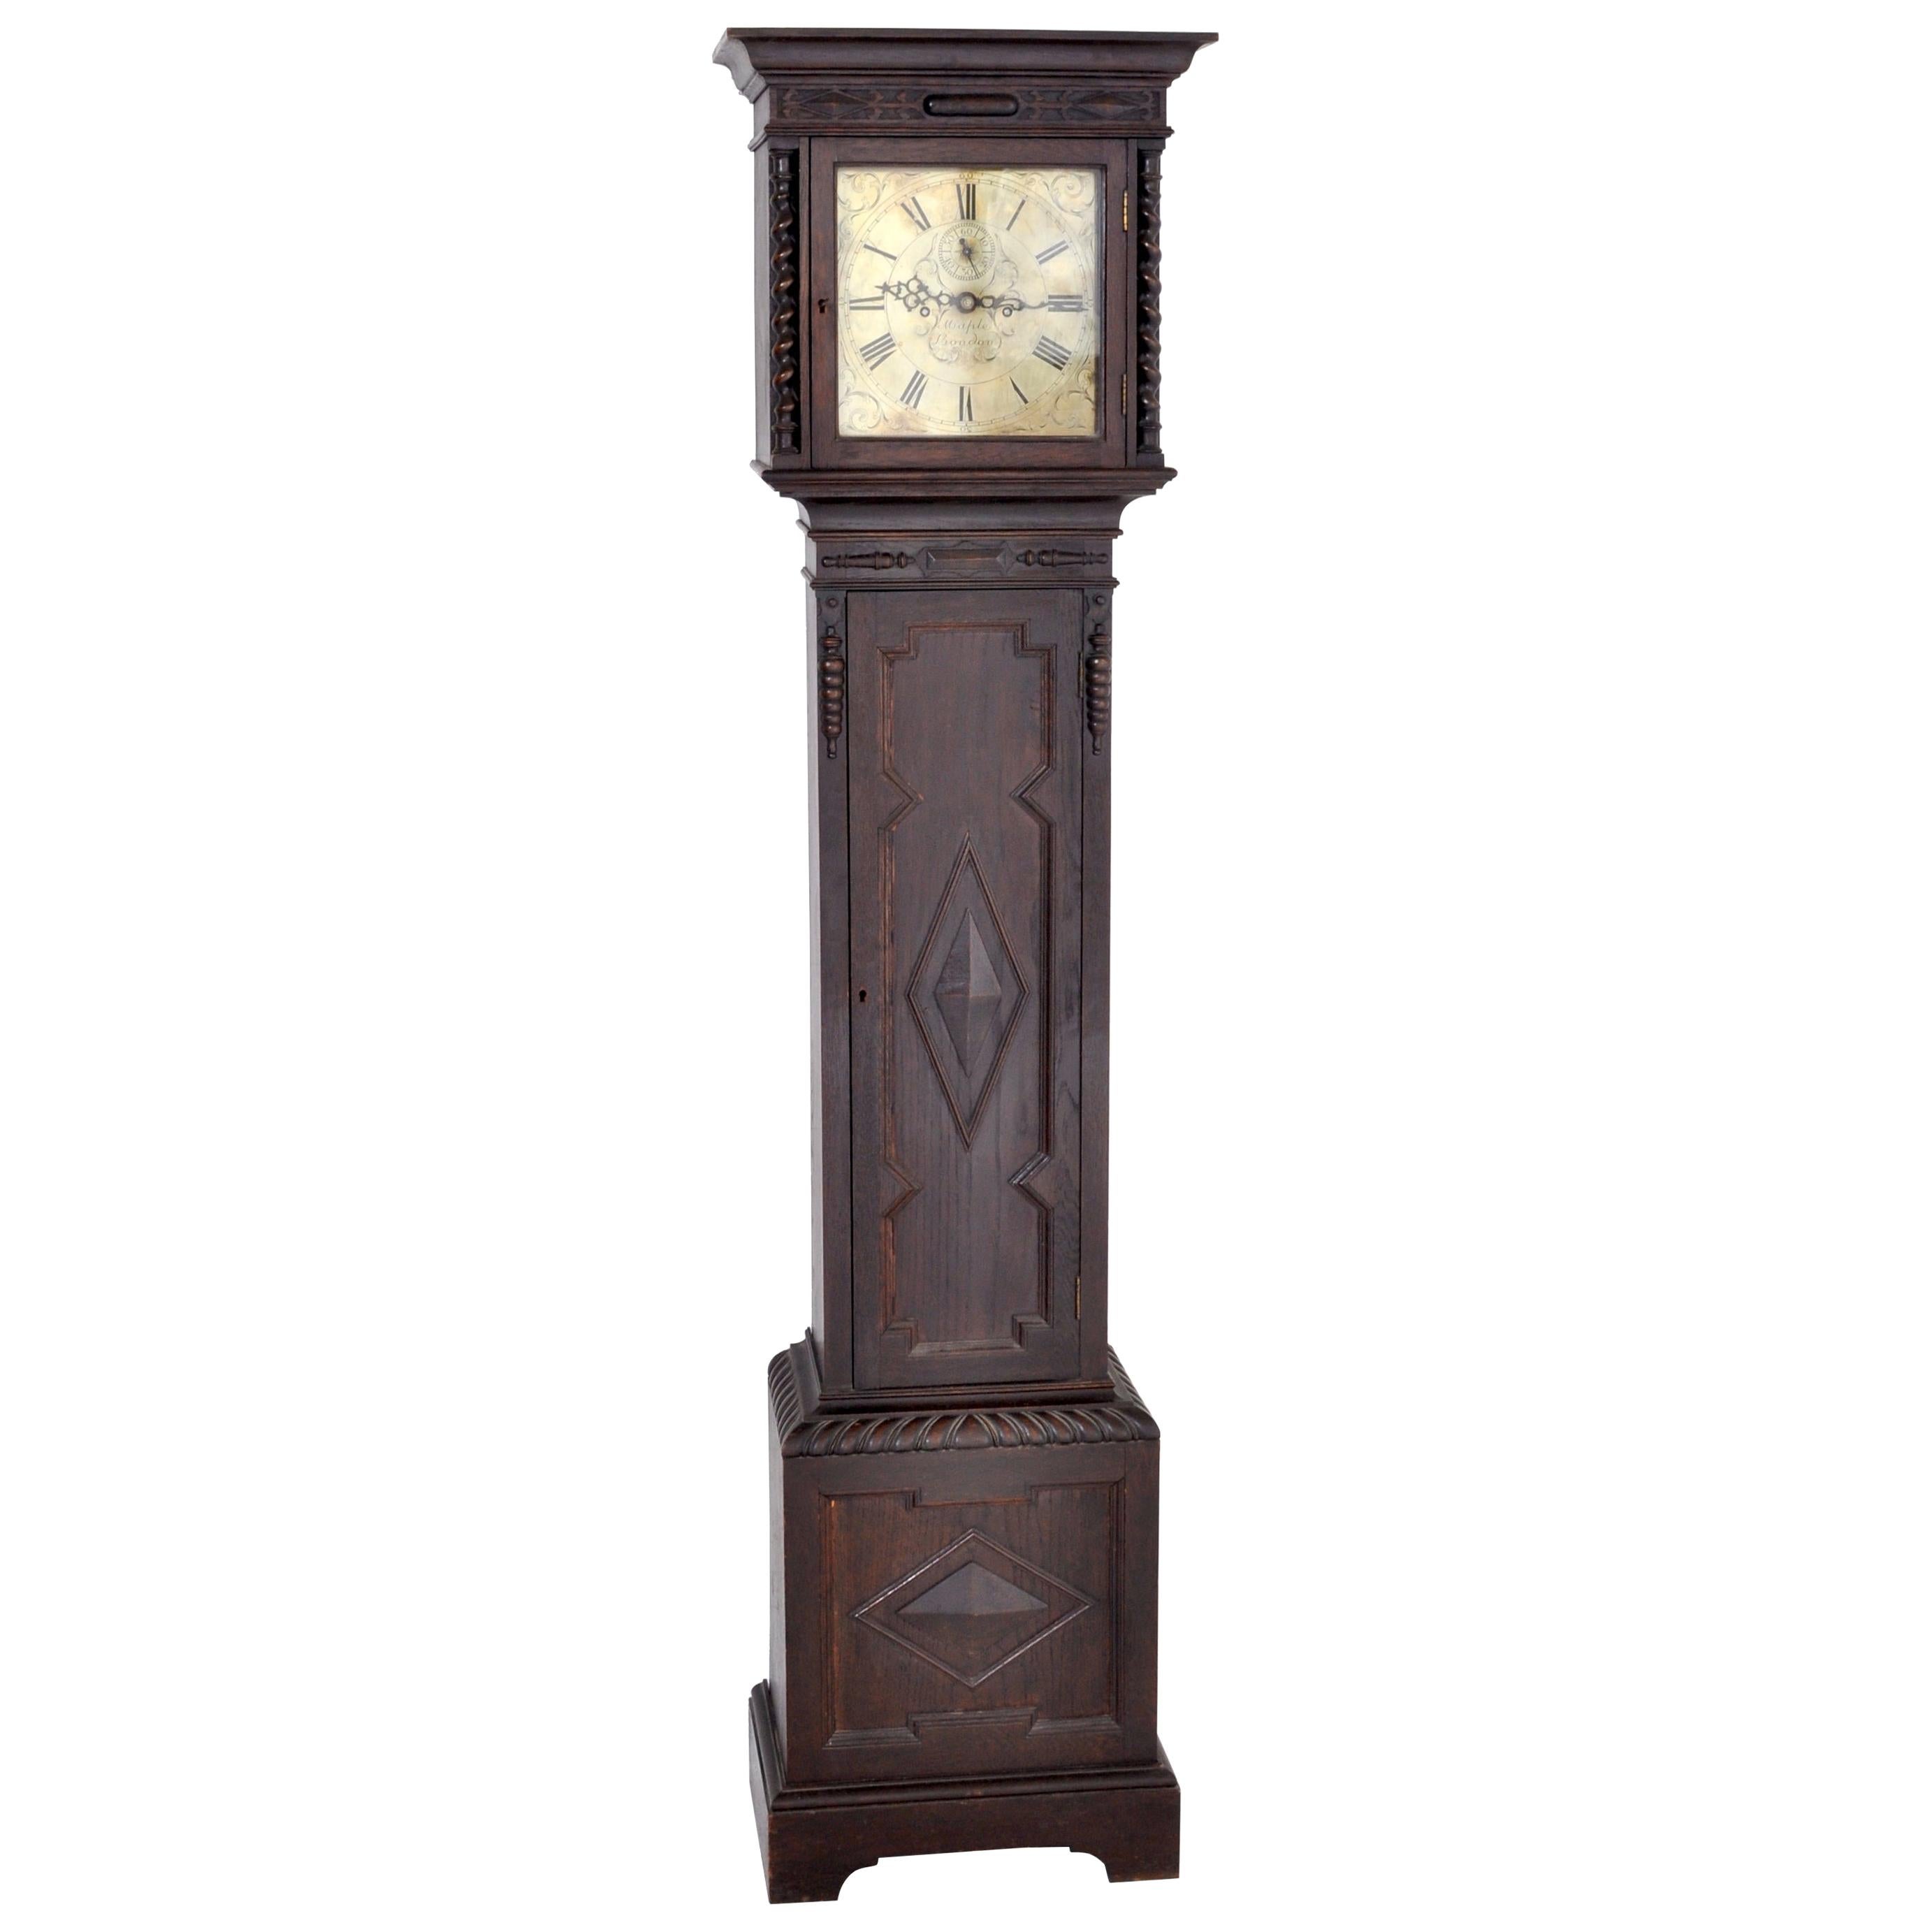 English Arts & Crafts 8-Day Longcase Clock by Maple of London, circa 1890